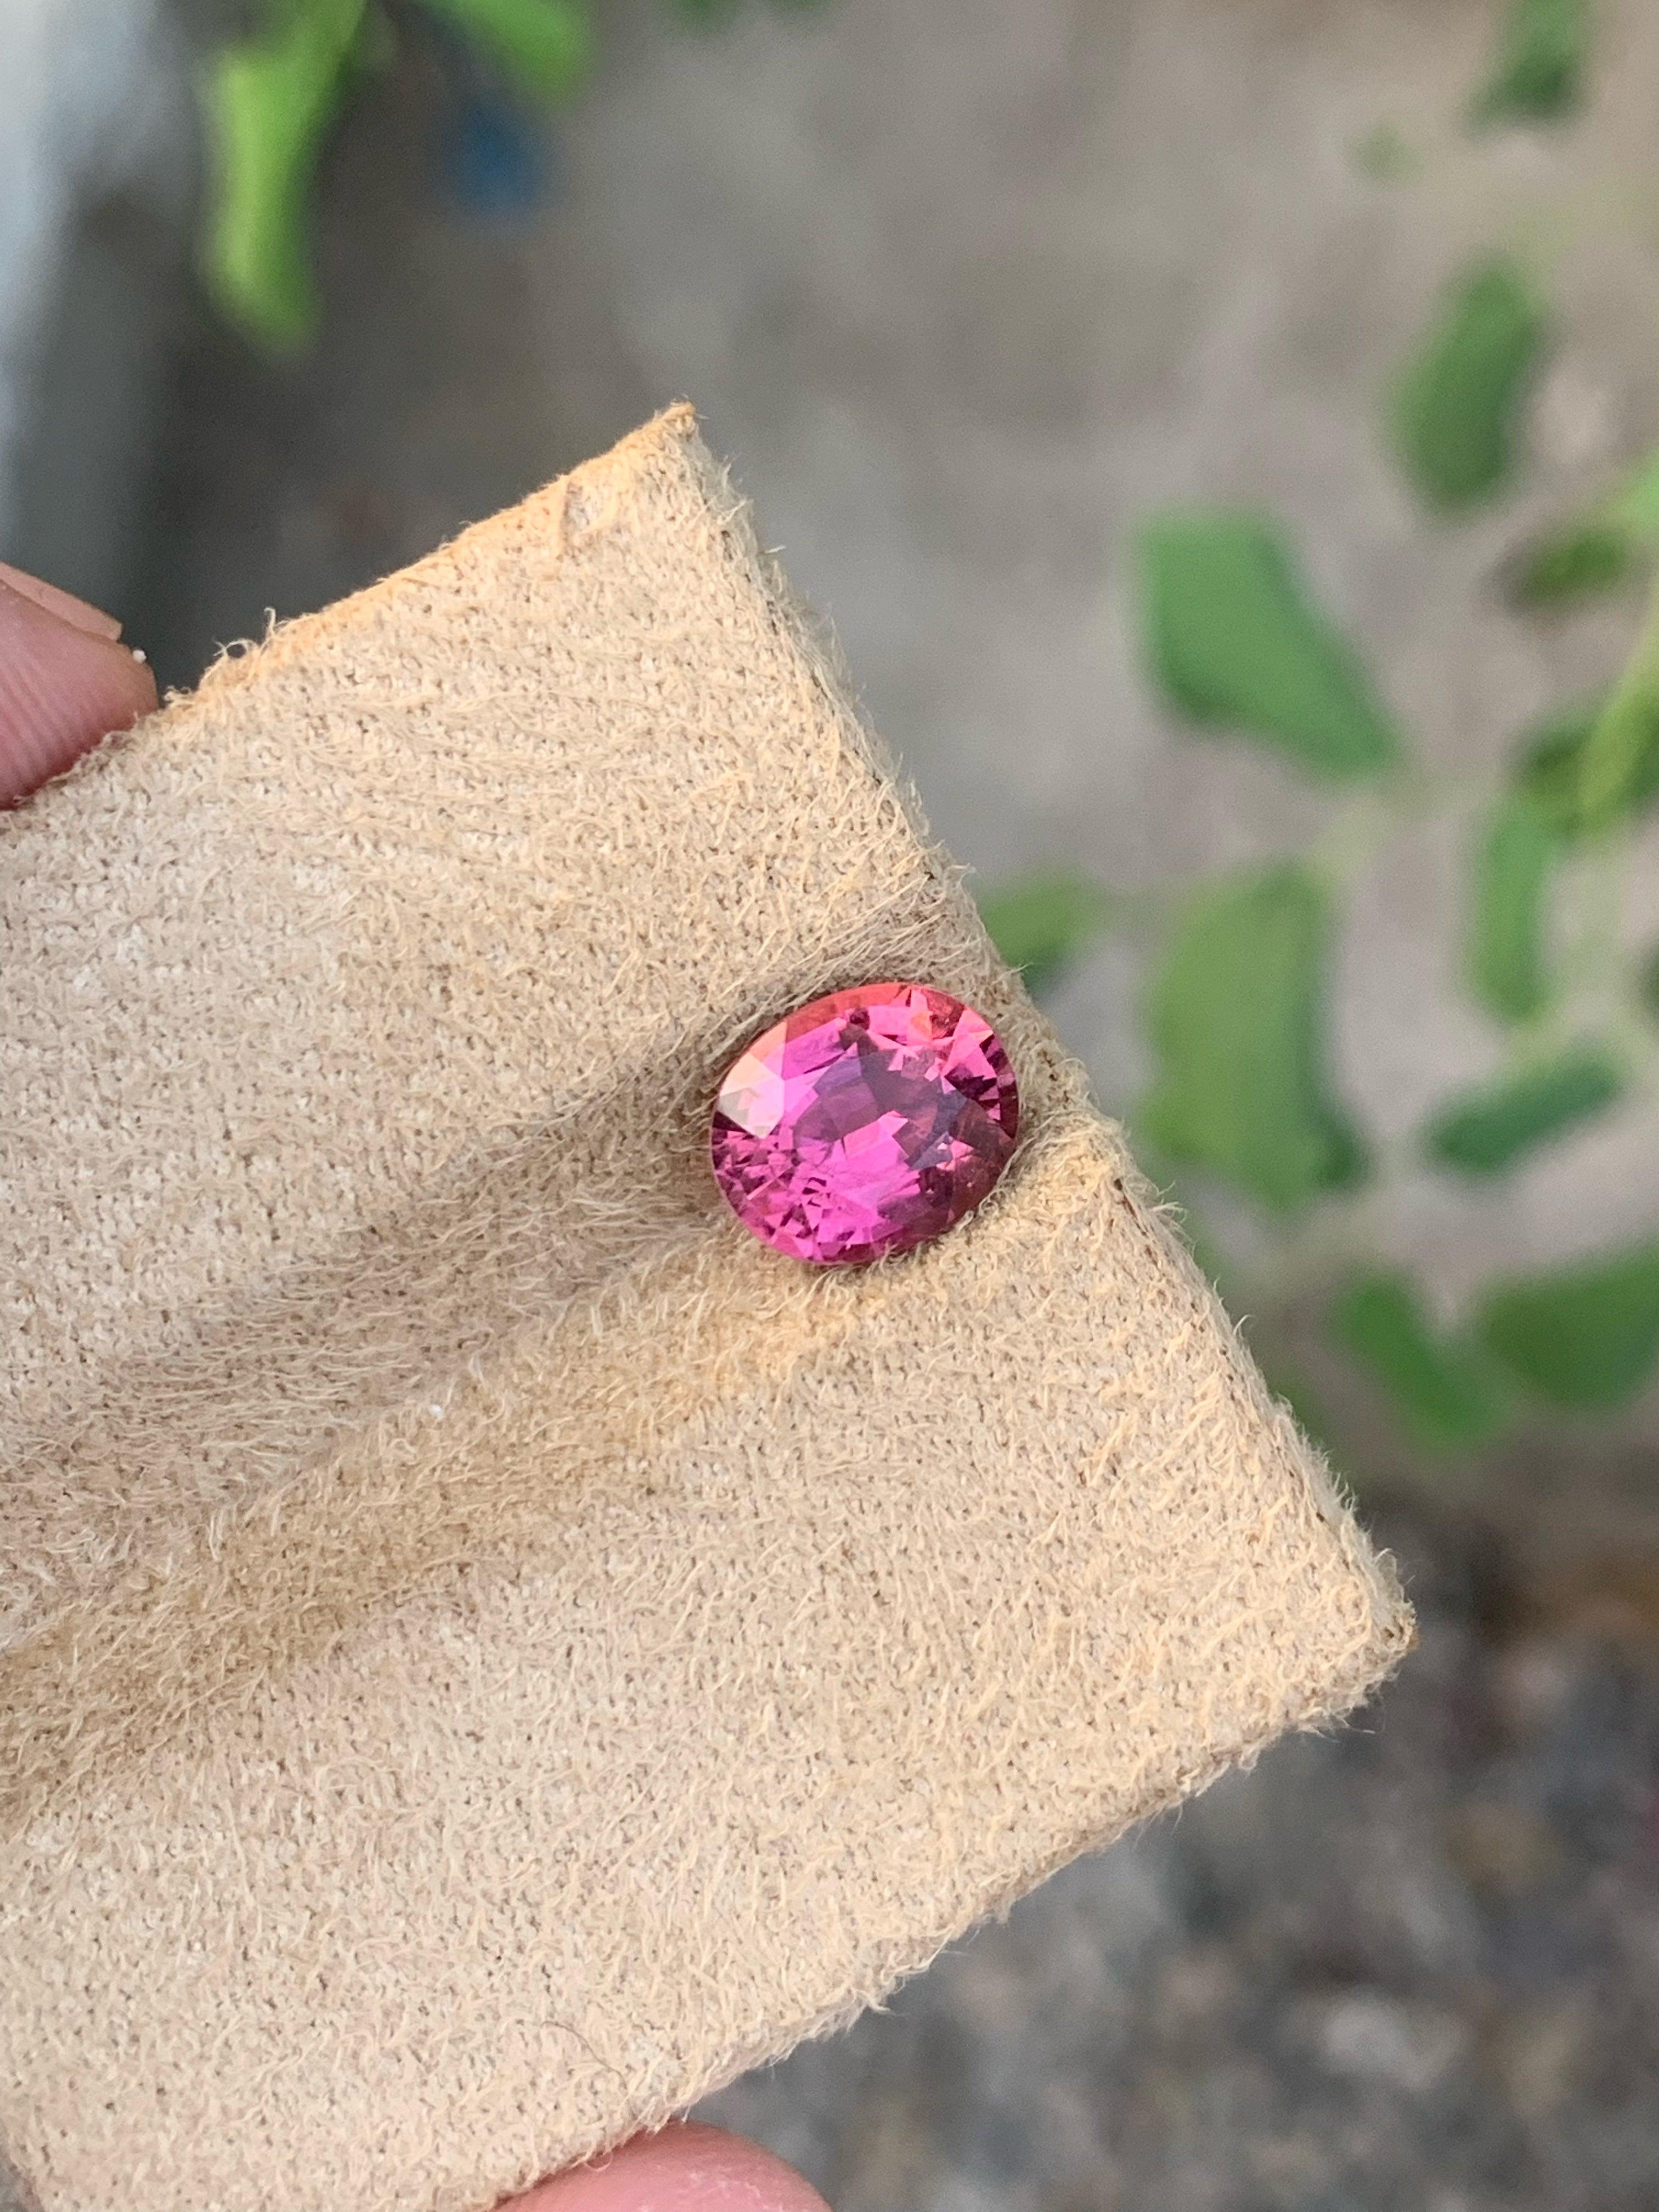 hot pink stone